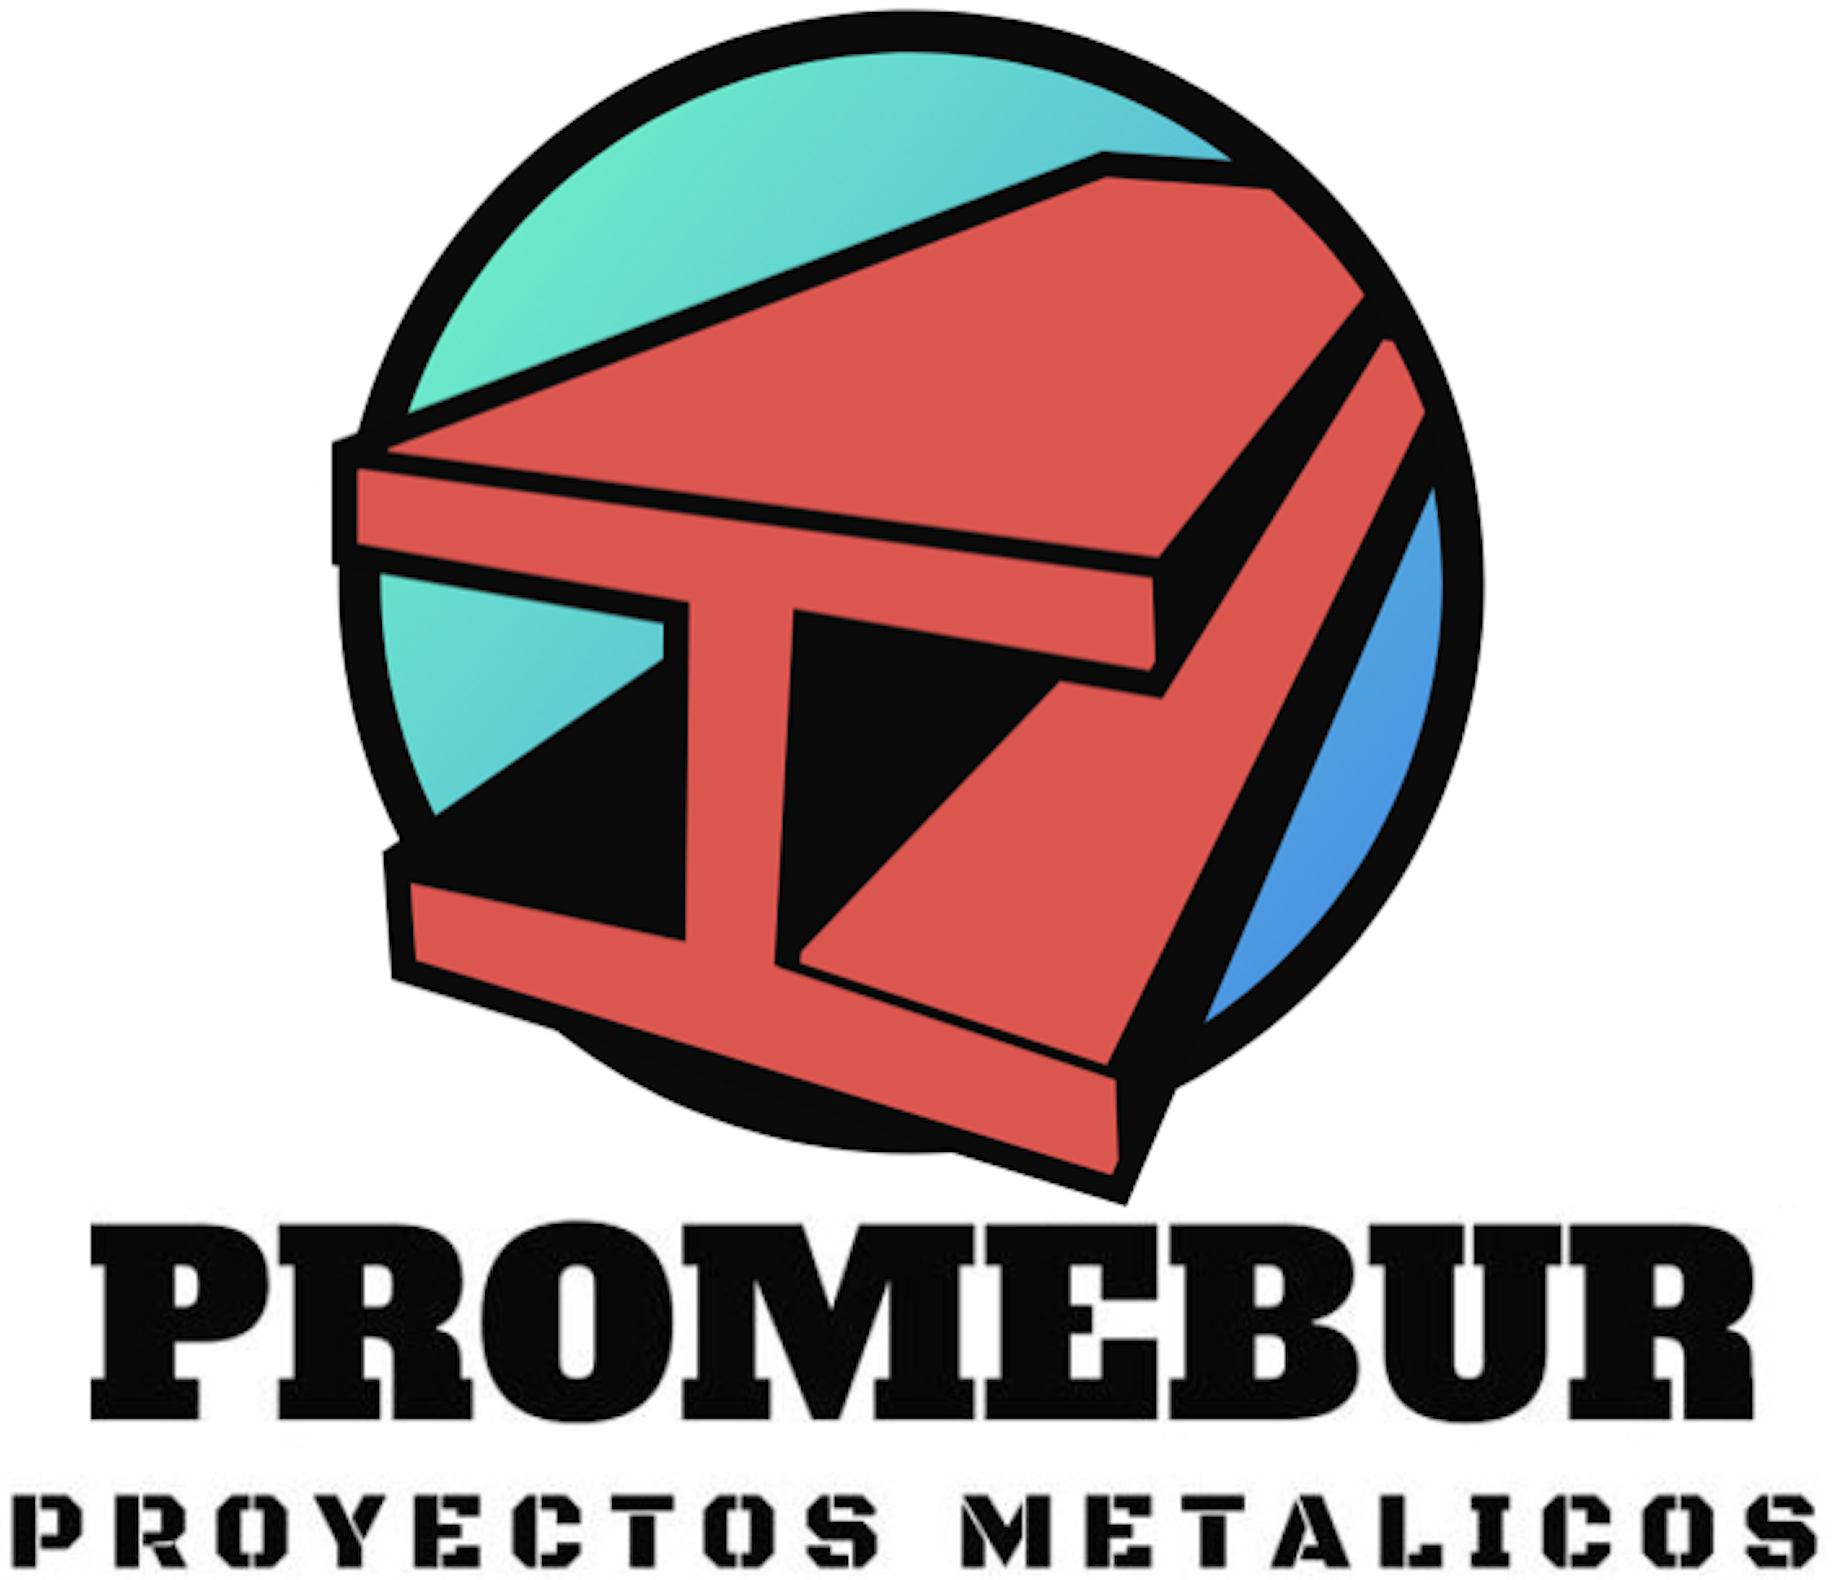 Promebur